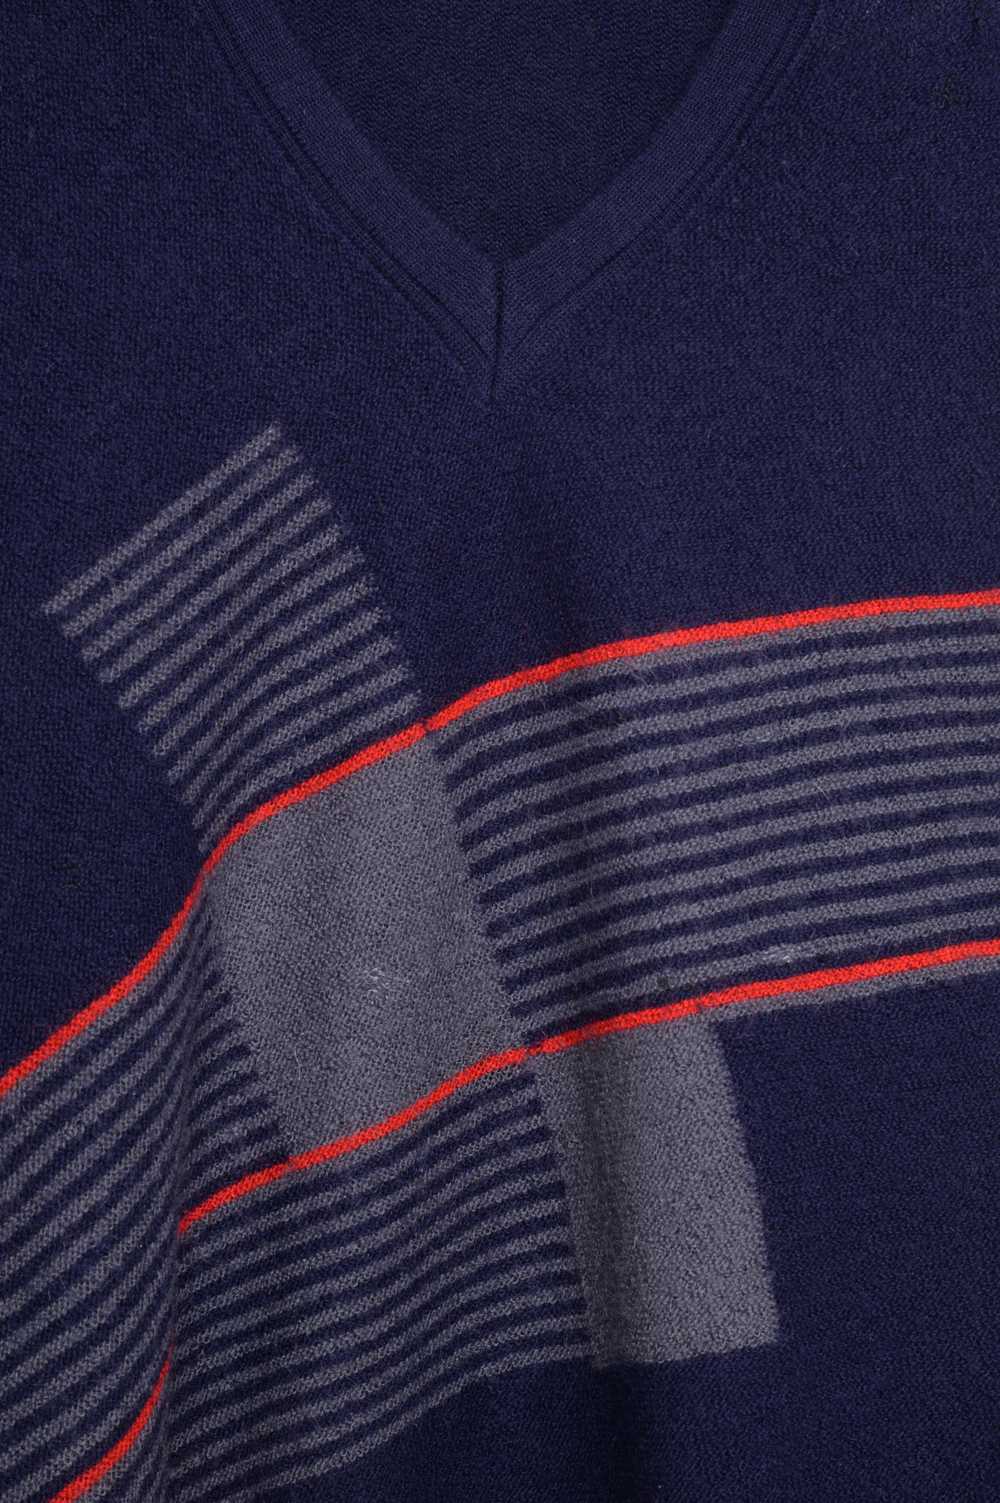 Navy Wool Sweater - image 2